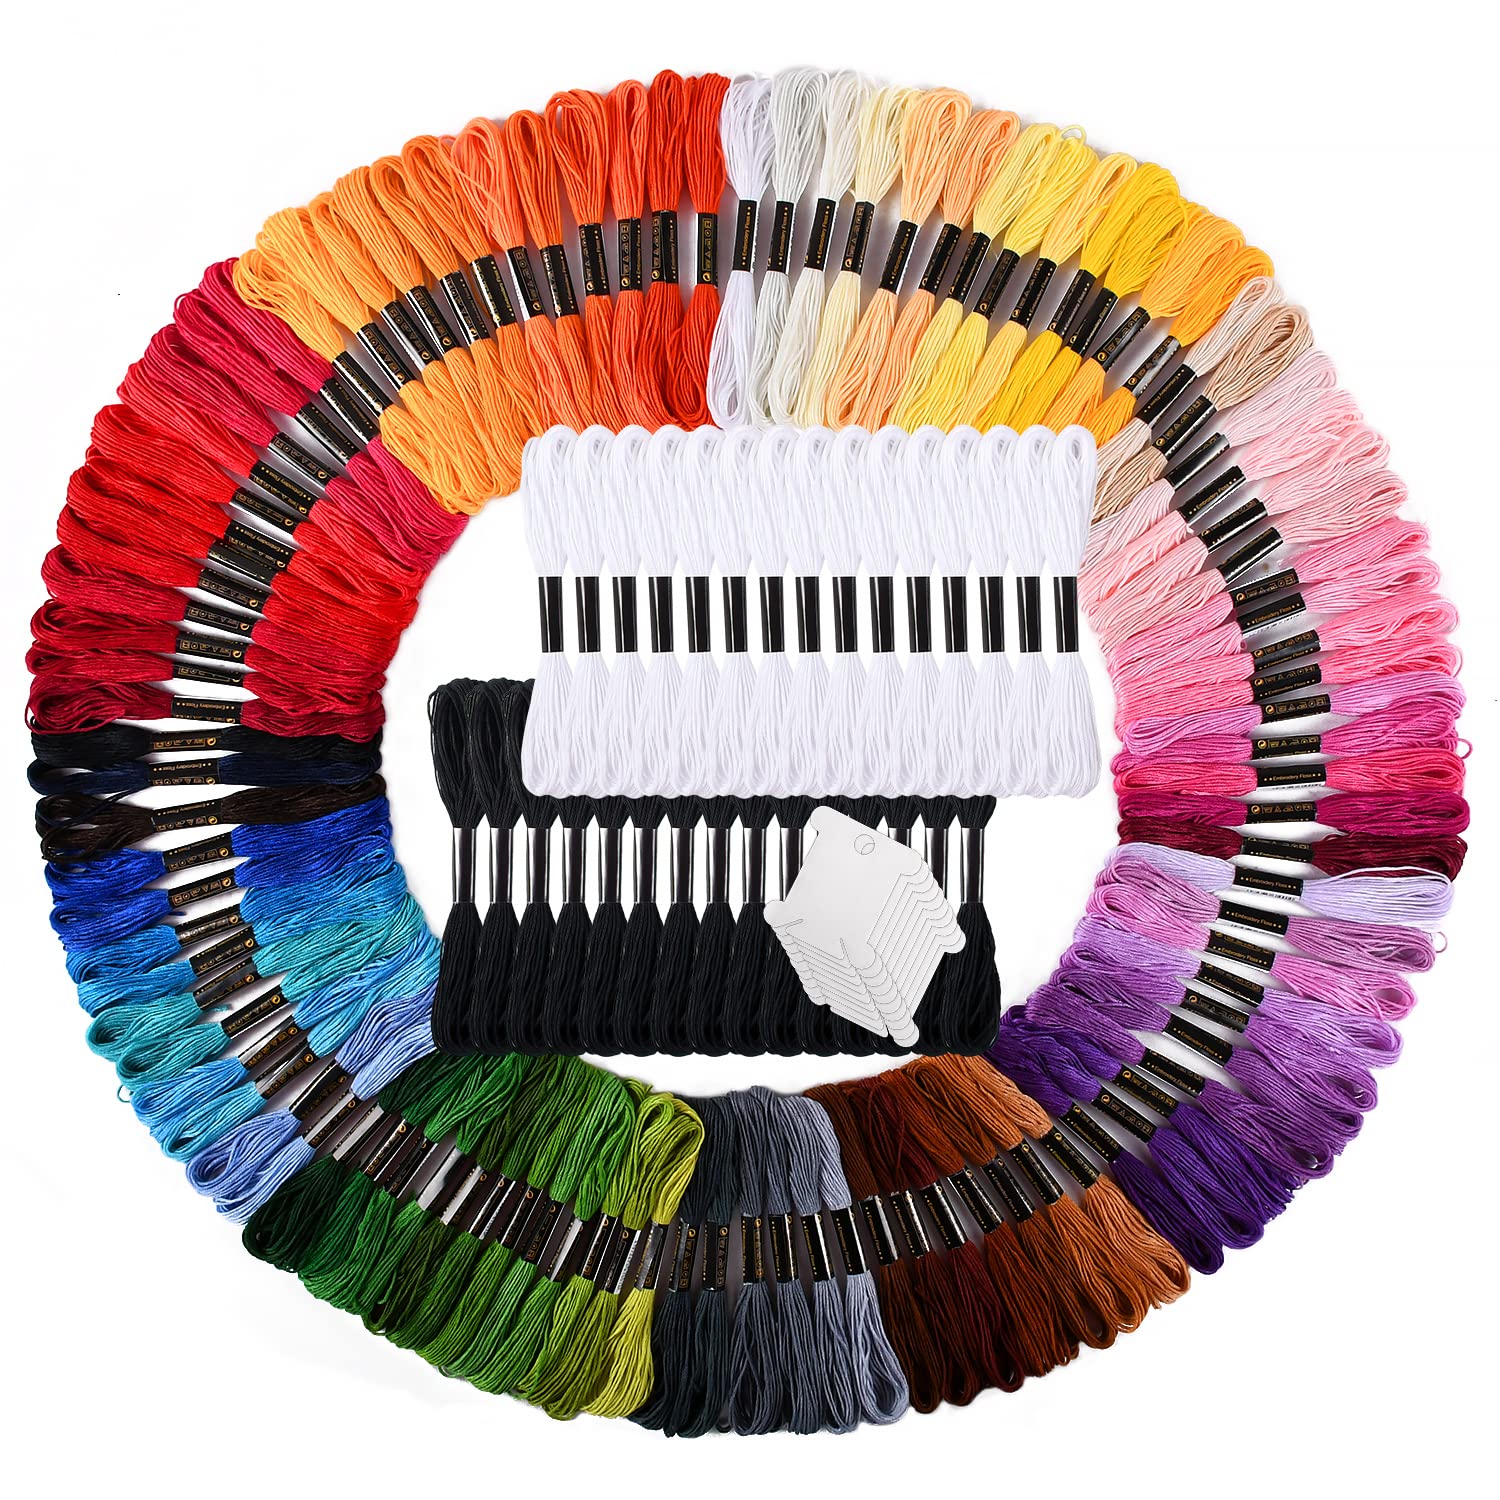  Premium Rainbow Color Embroidery Floss bobbins - Cross